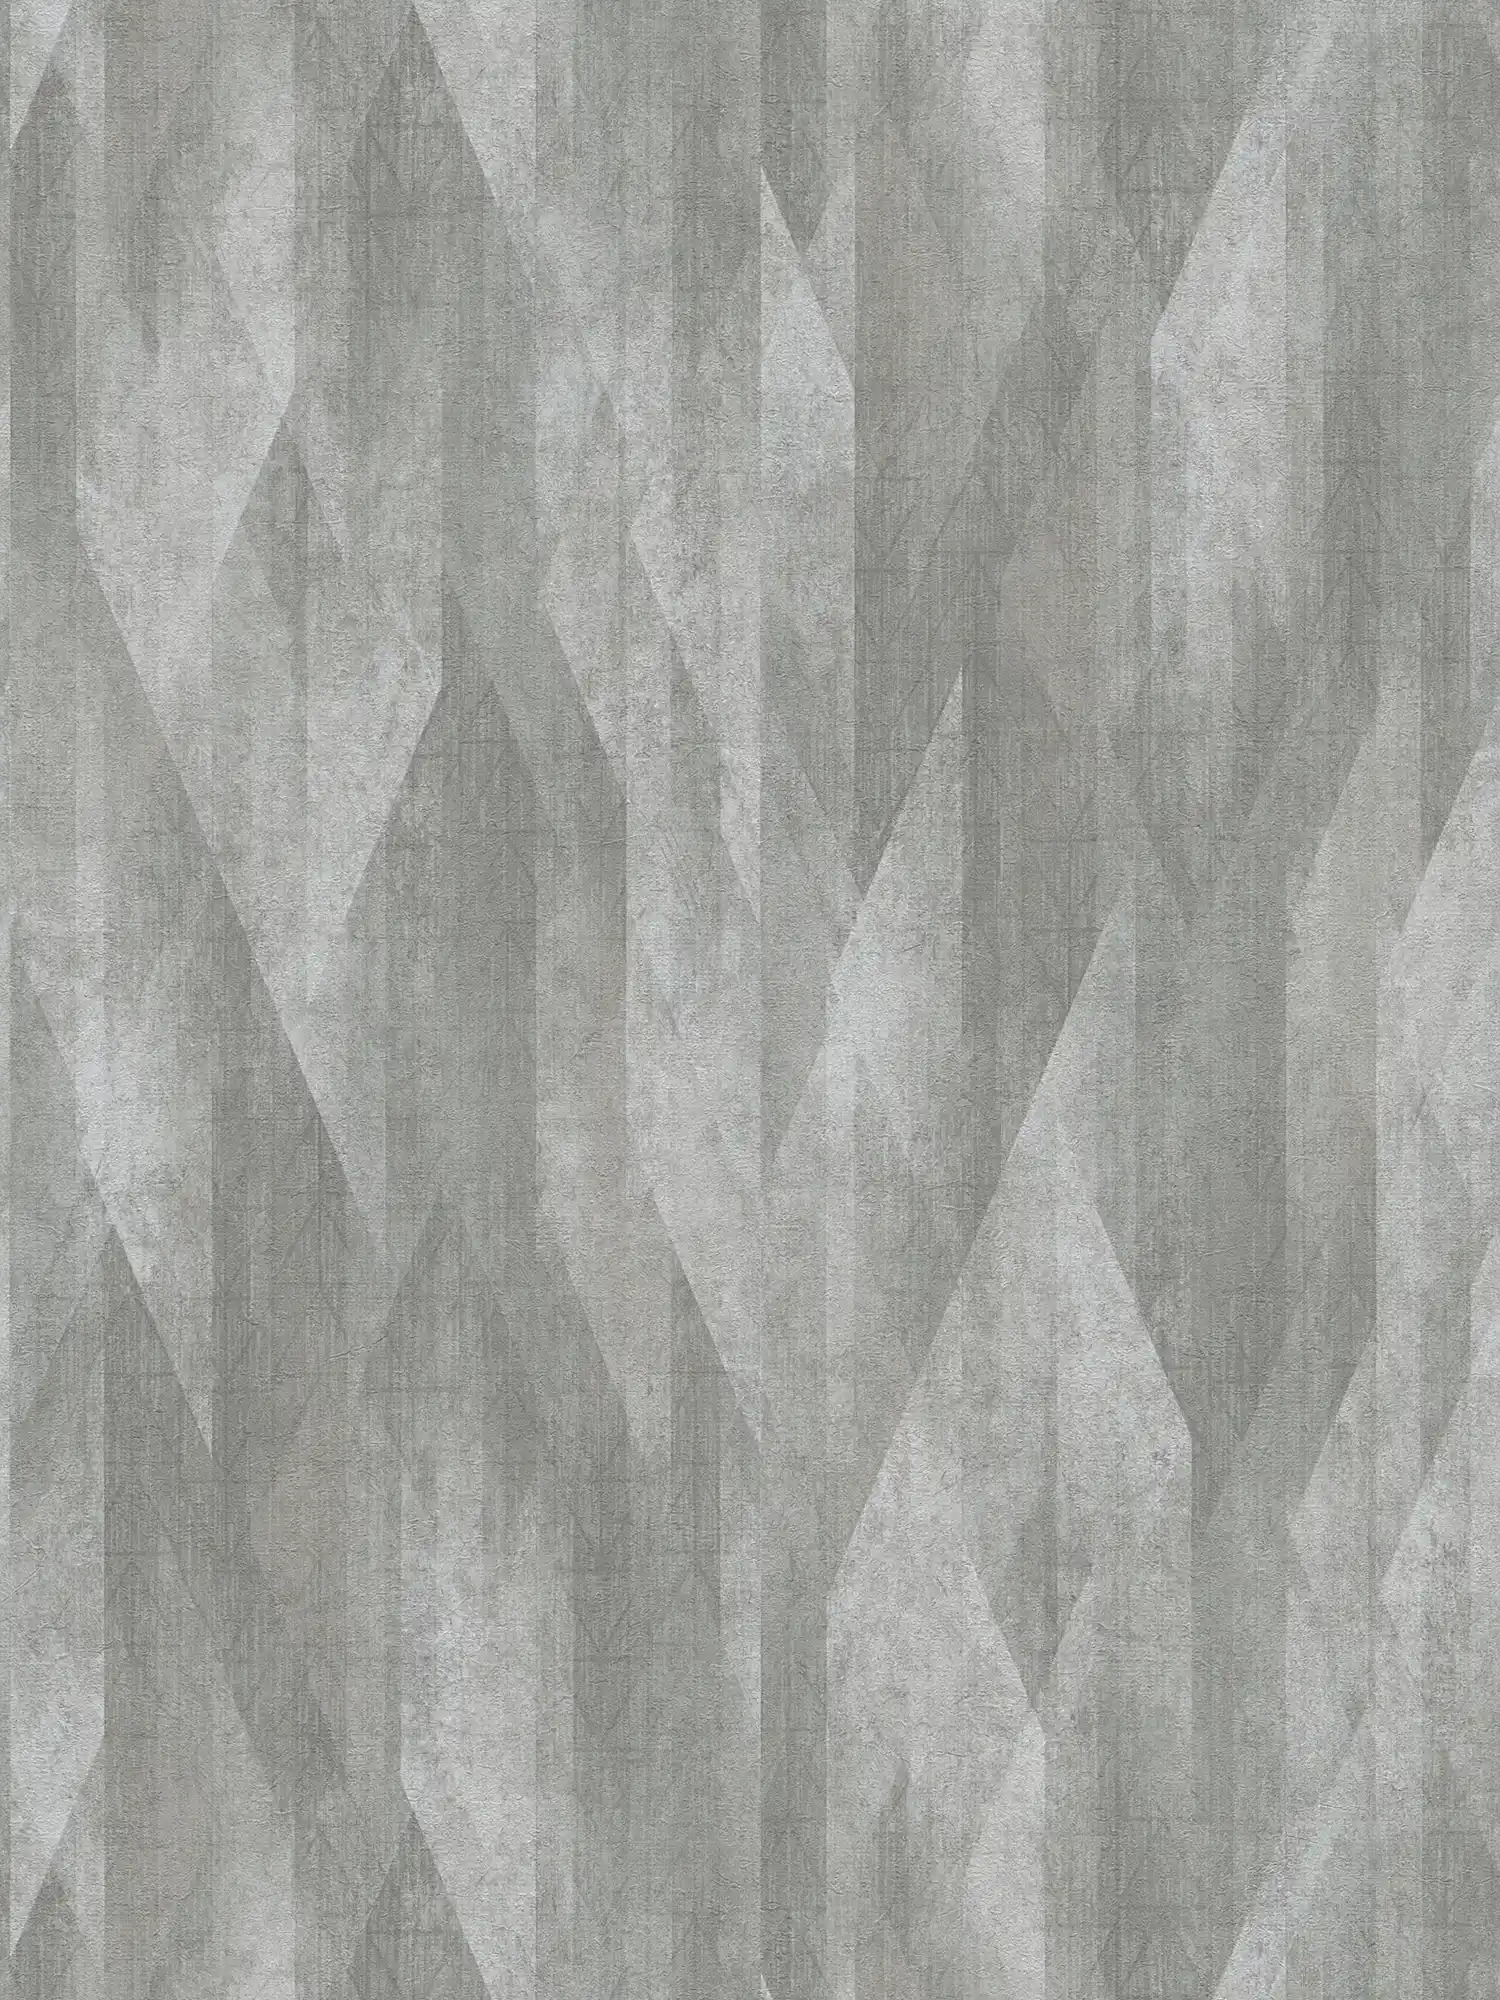 Non-woven wallpaper with graphic diamond design - grey